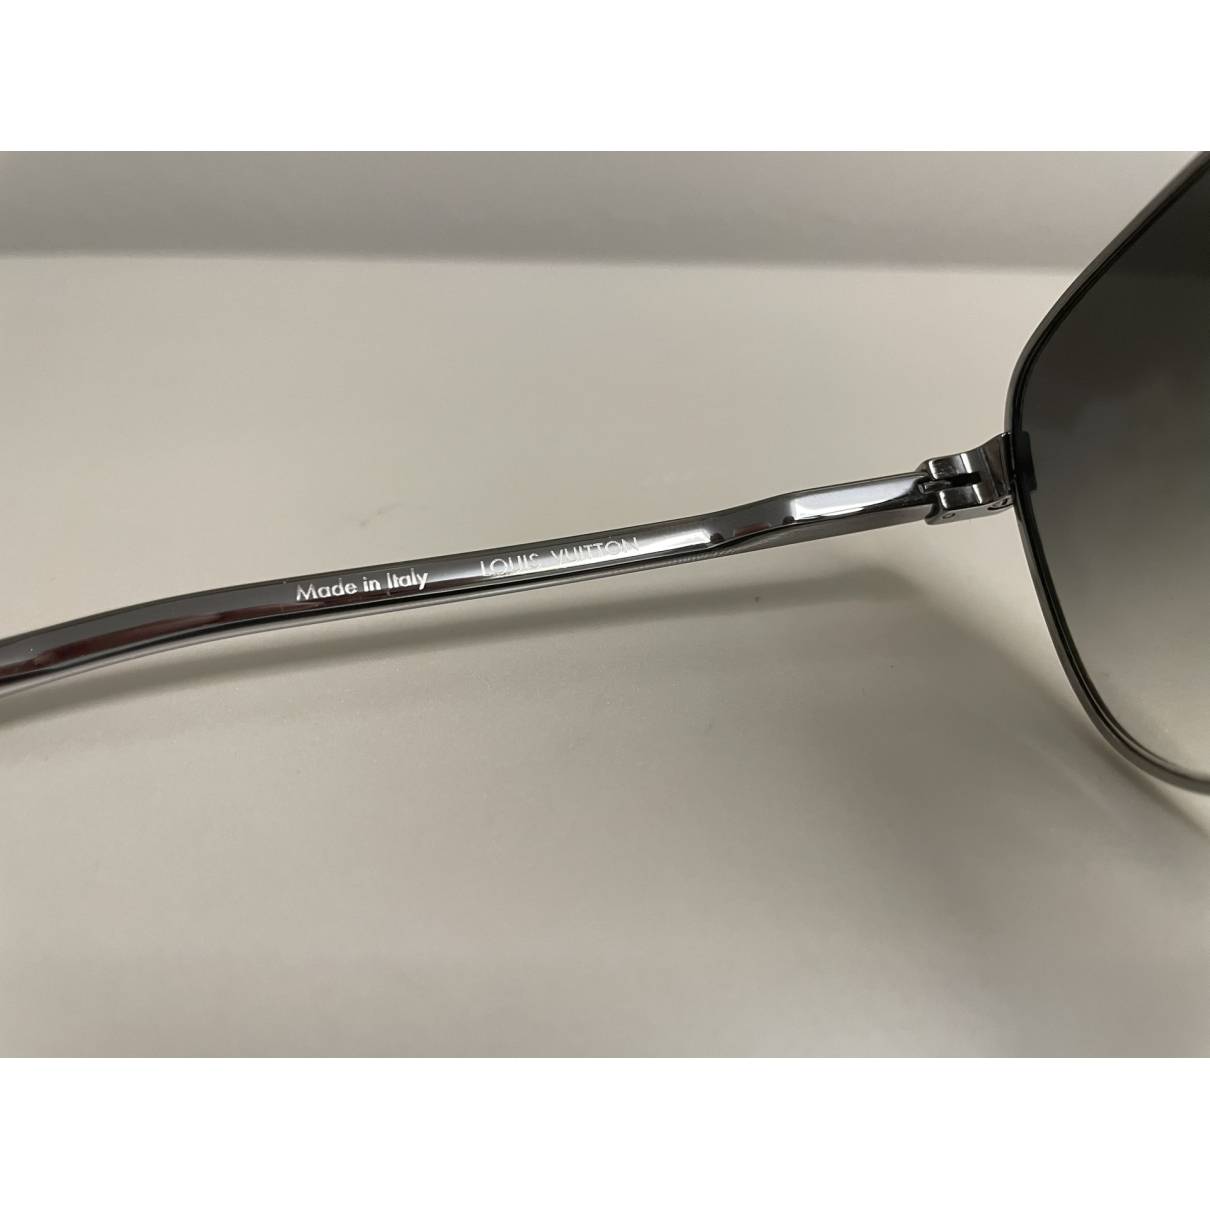 Sunglasses Louis Vuitton Silver in Metal - 32389808